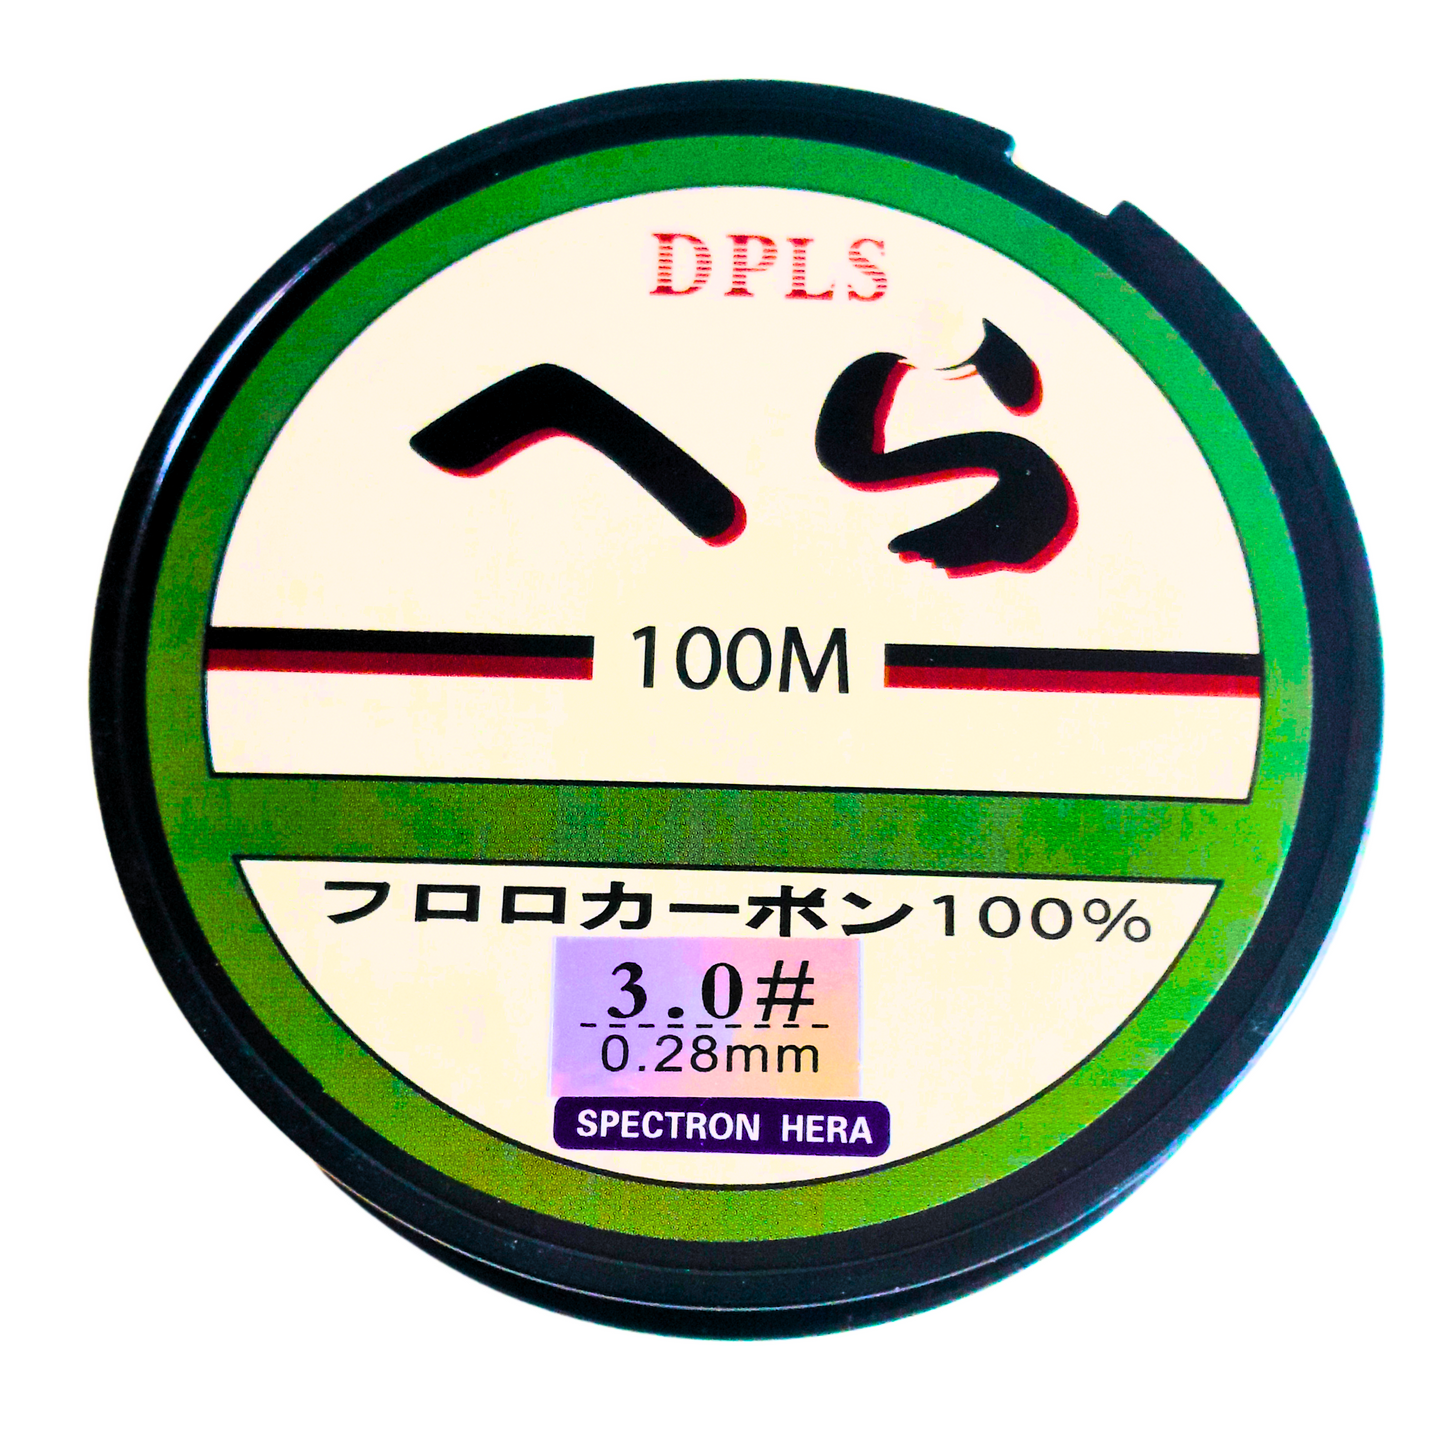 Prunanm Monofilament Fishing Line - 100m |110yd - 0.28mm | #3.0